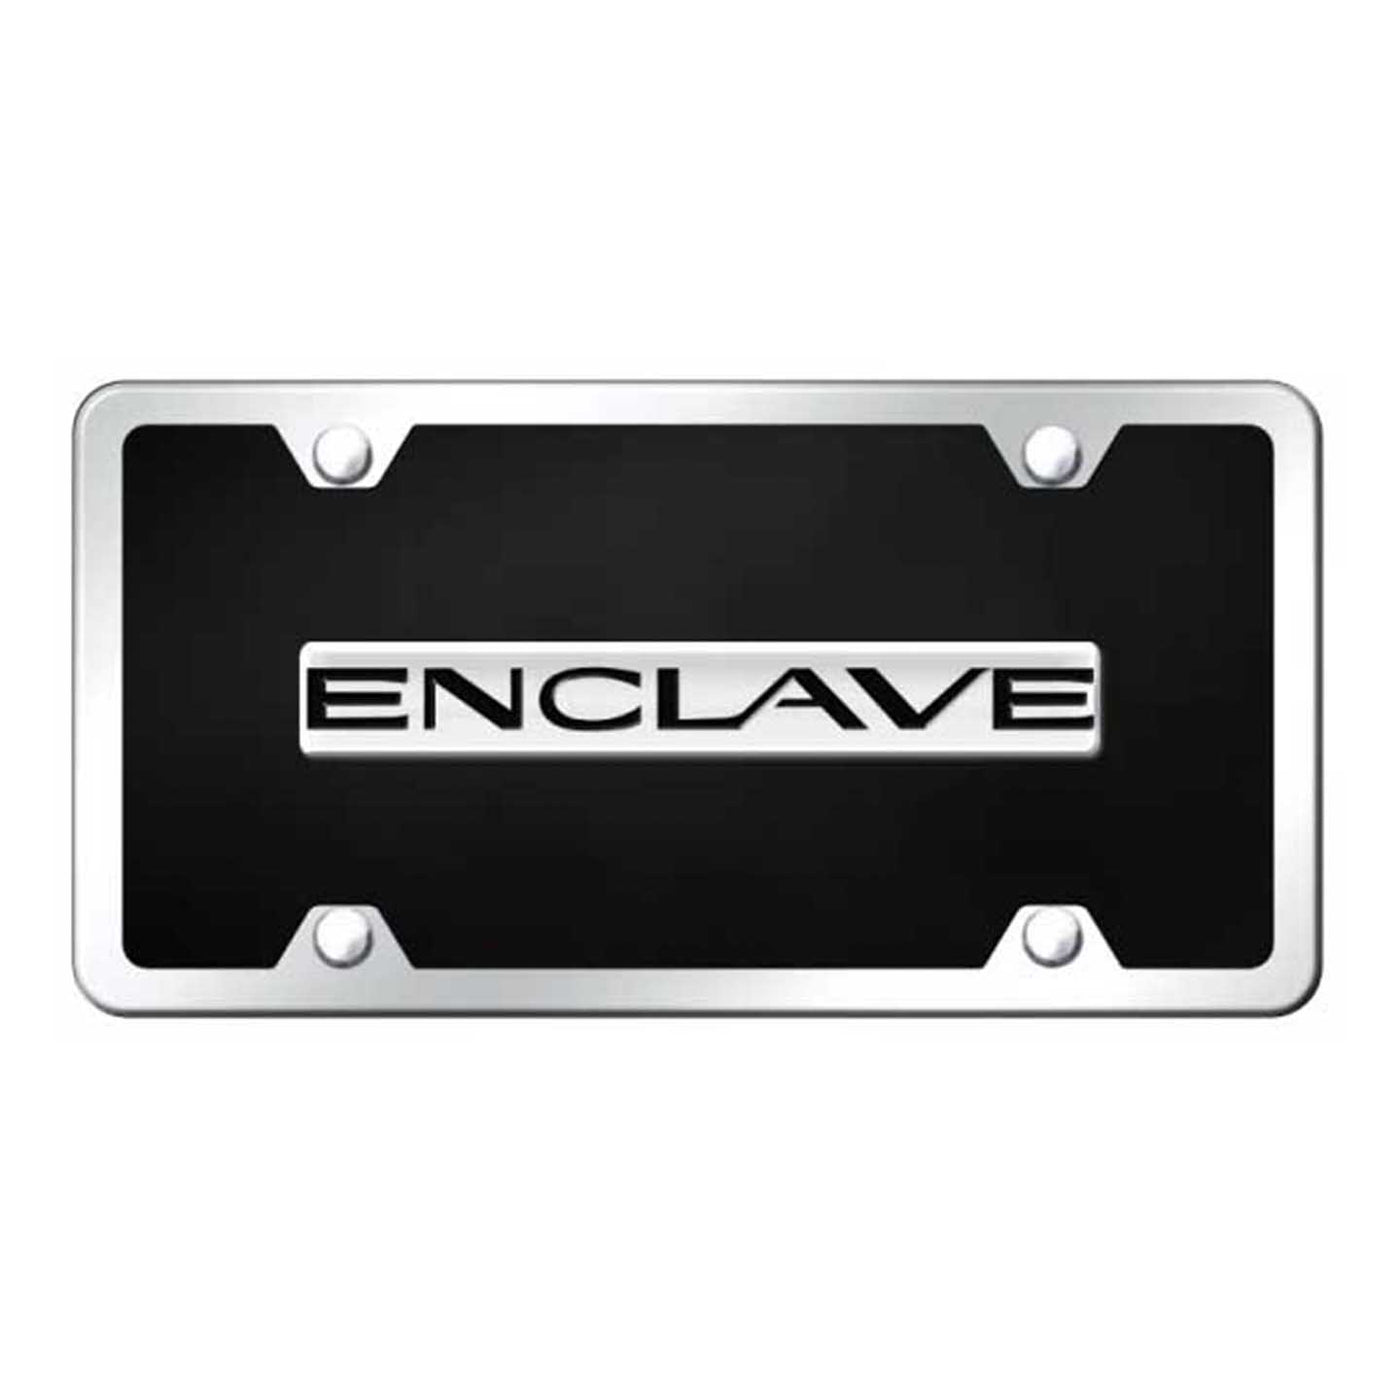 Enclave Name Acrylic Kit - Chrome on Black